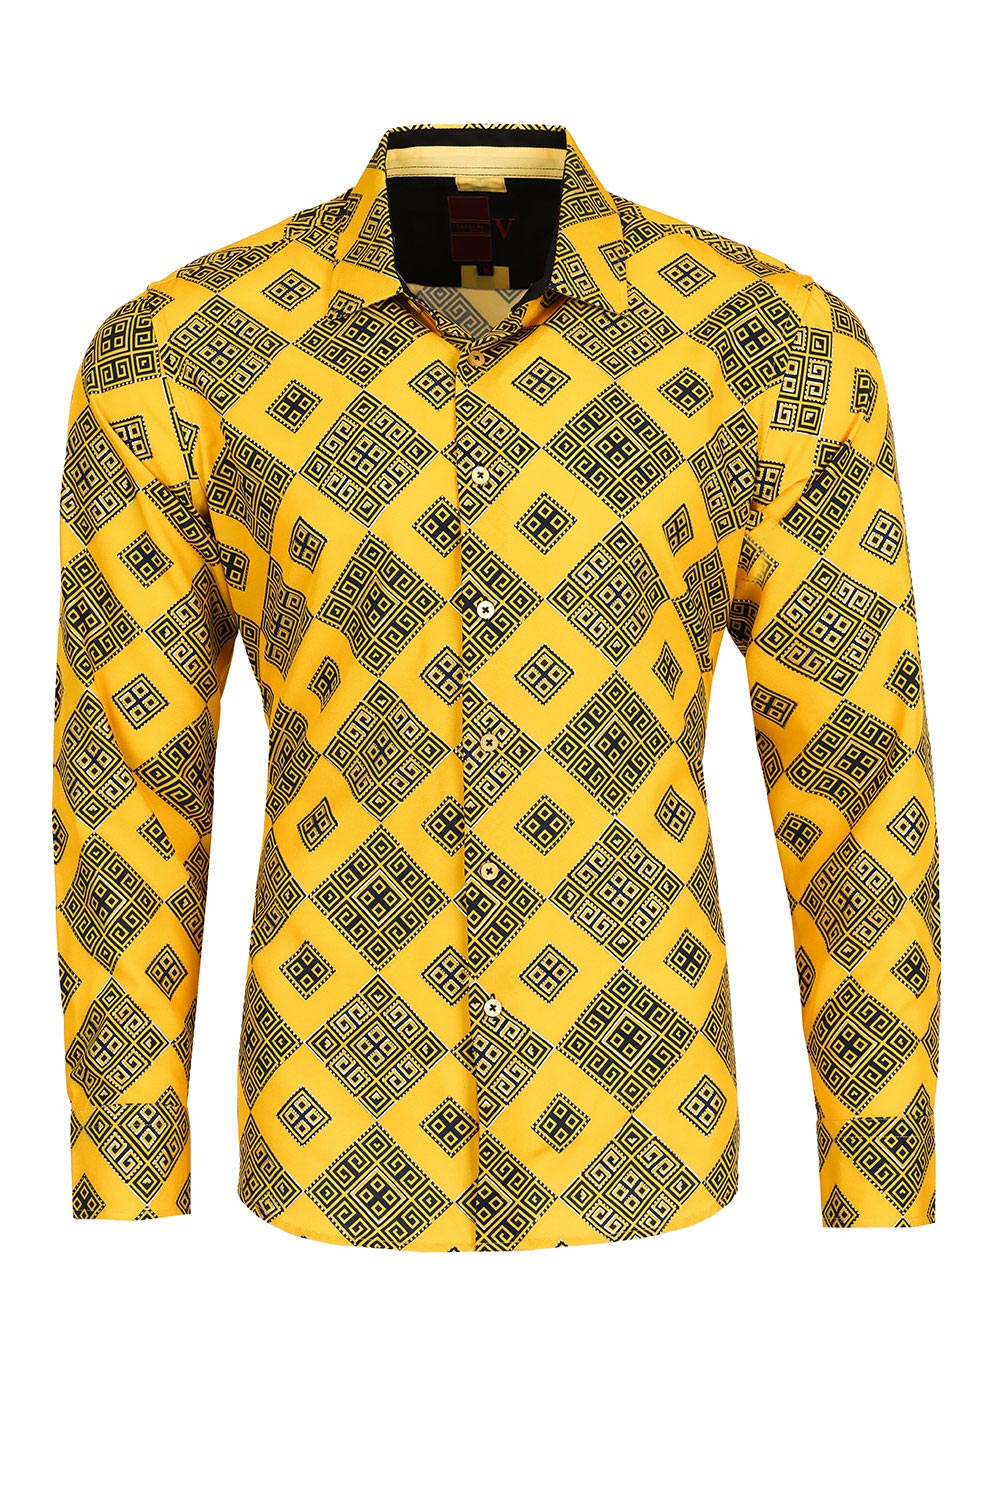 Vassari Men's Greek Print Design Button Down Luxury Shirts 2VS120 Yellow